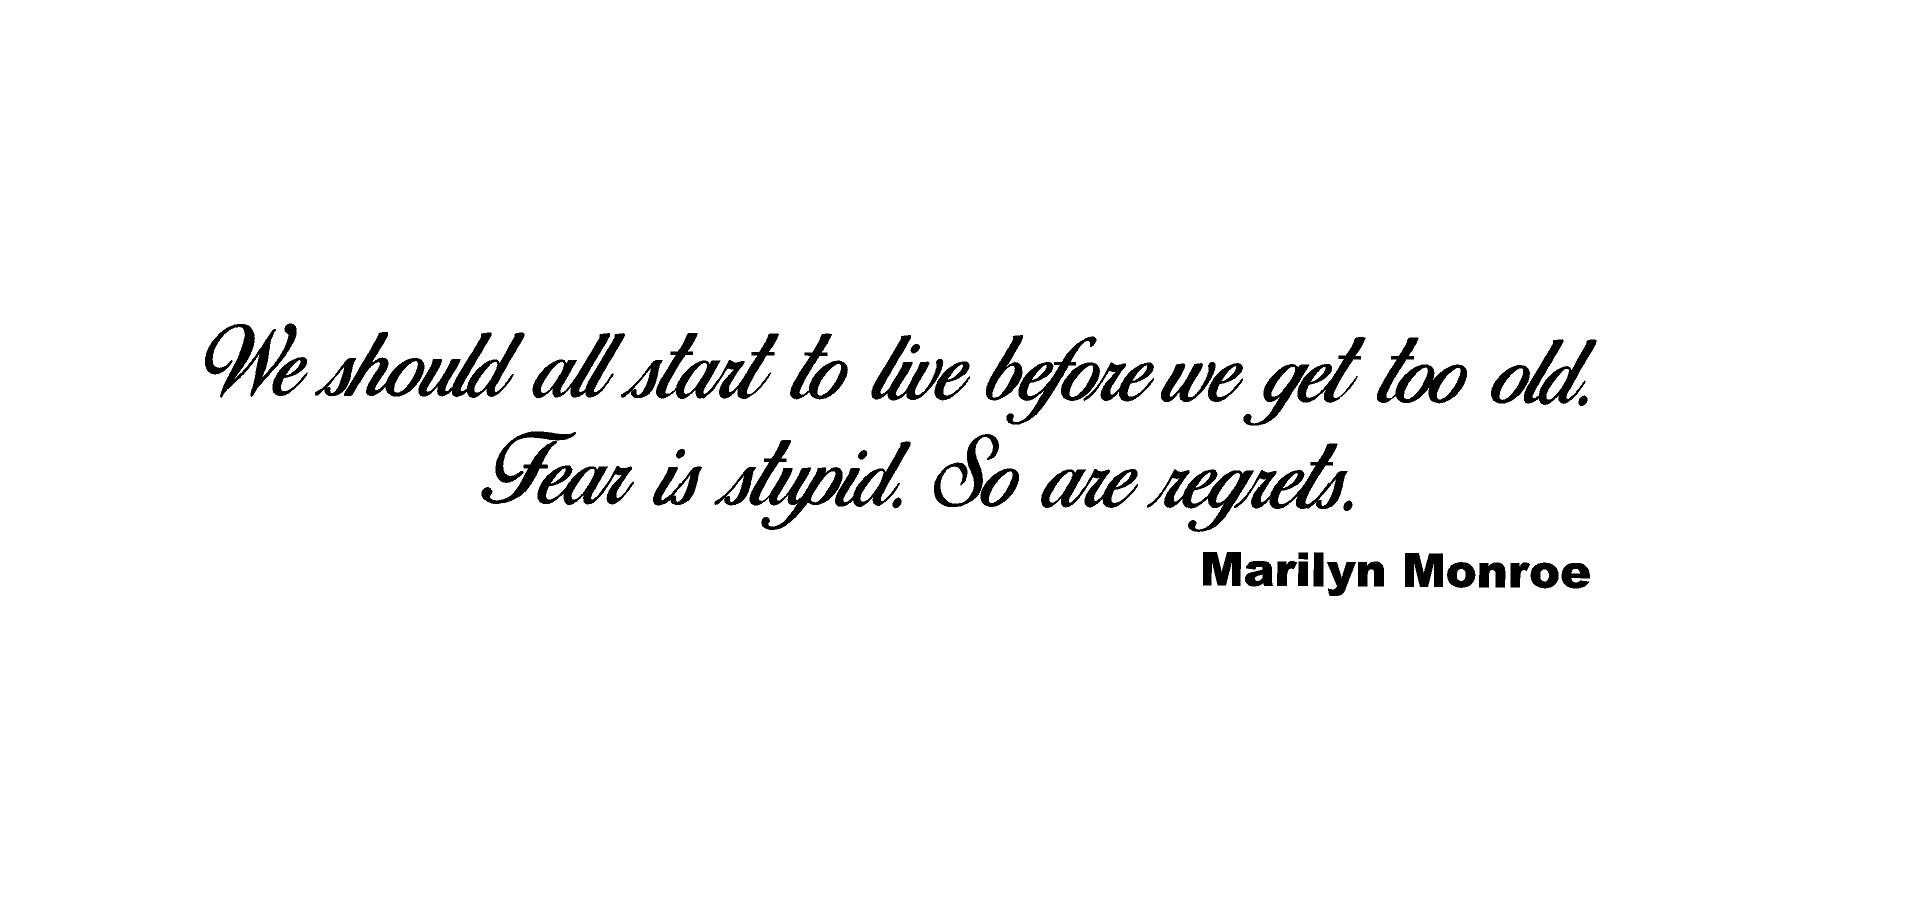 Marilyn Monroe We should all